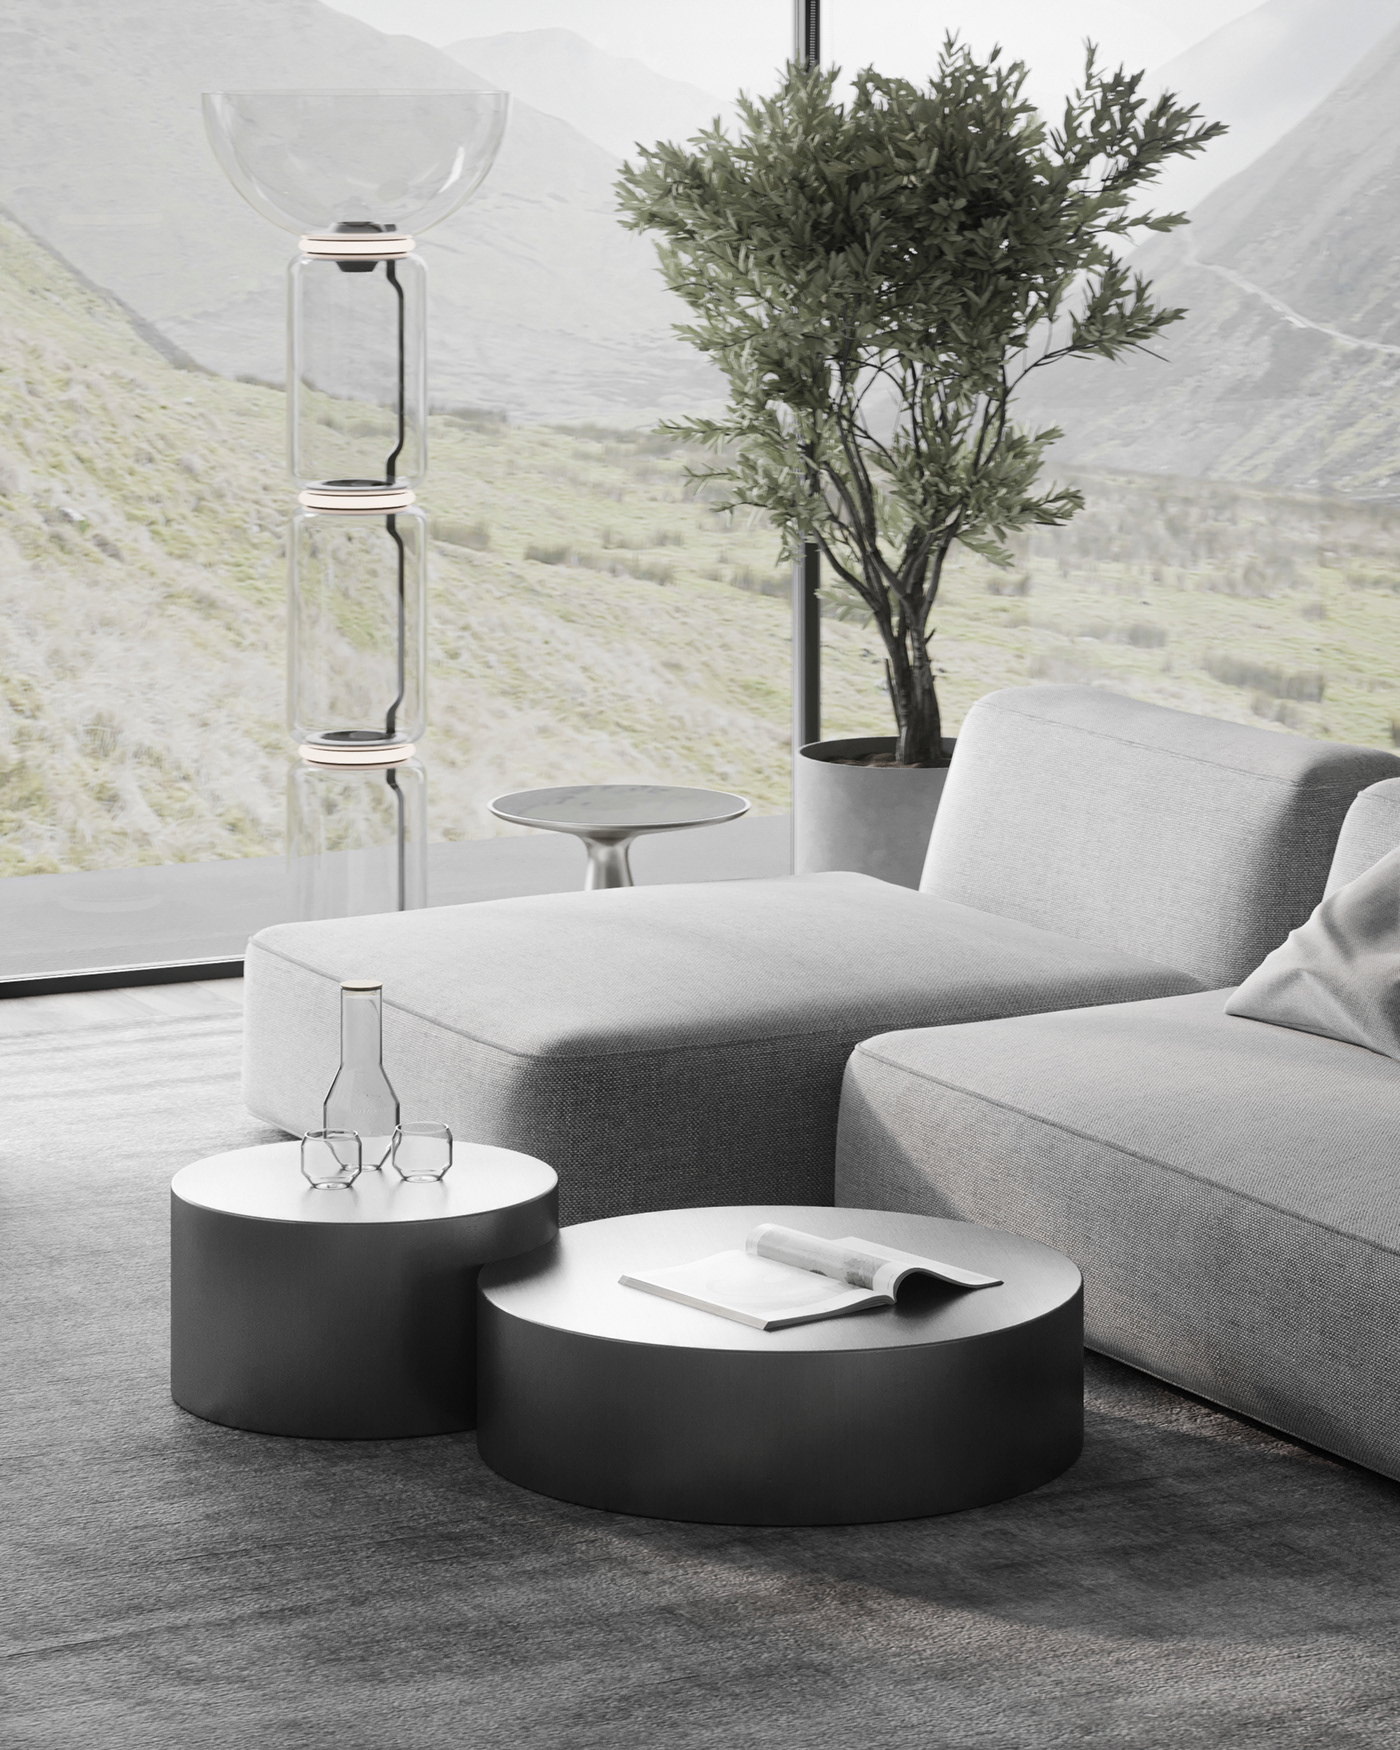 CGI corona render  corona renderer CoronaRender  design Interior interior design  minimal minimalist visualization